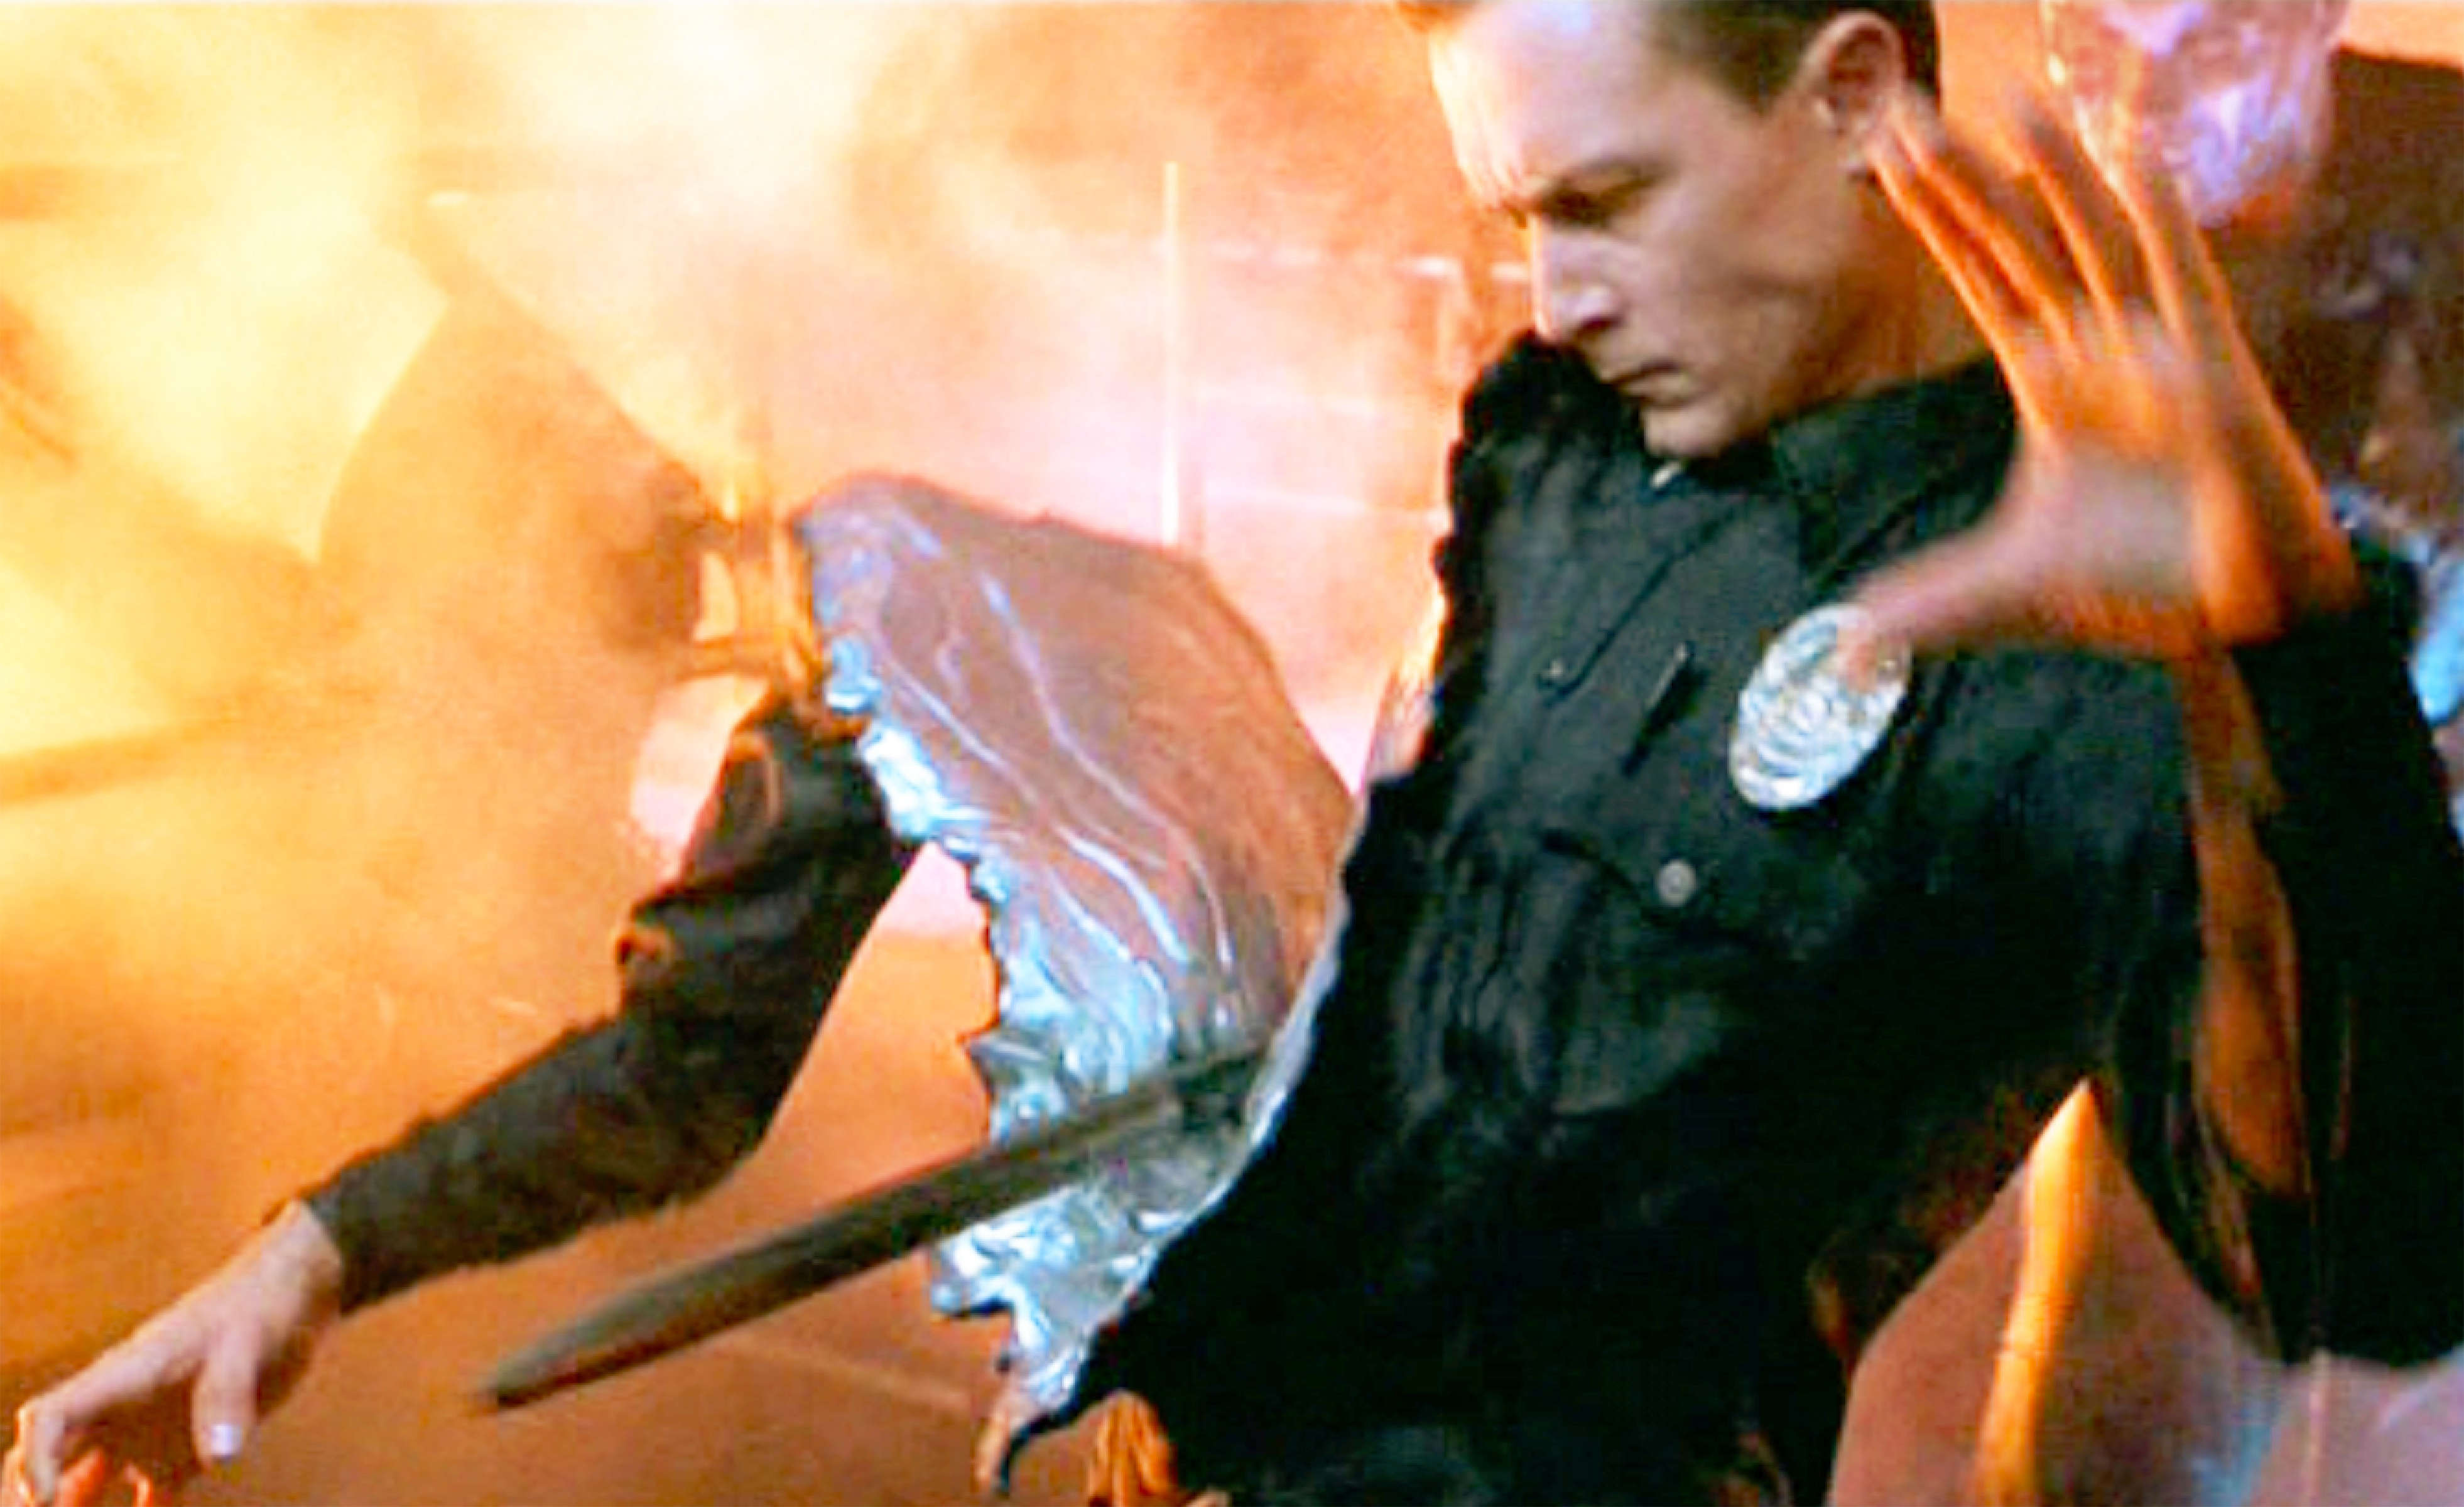 Early CGI: How James Cameron & Crew Made Those Wild Liquid Metal Effects in Terminator 2